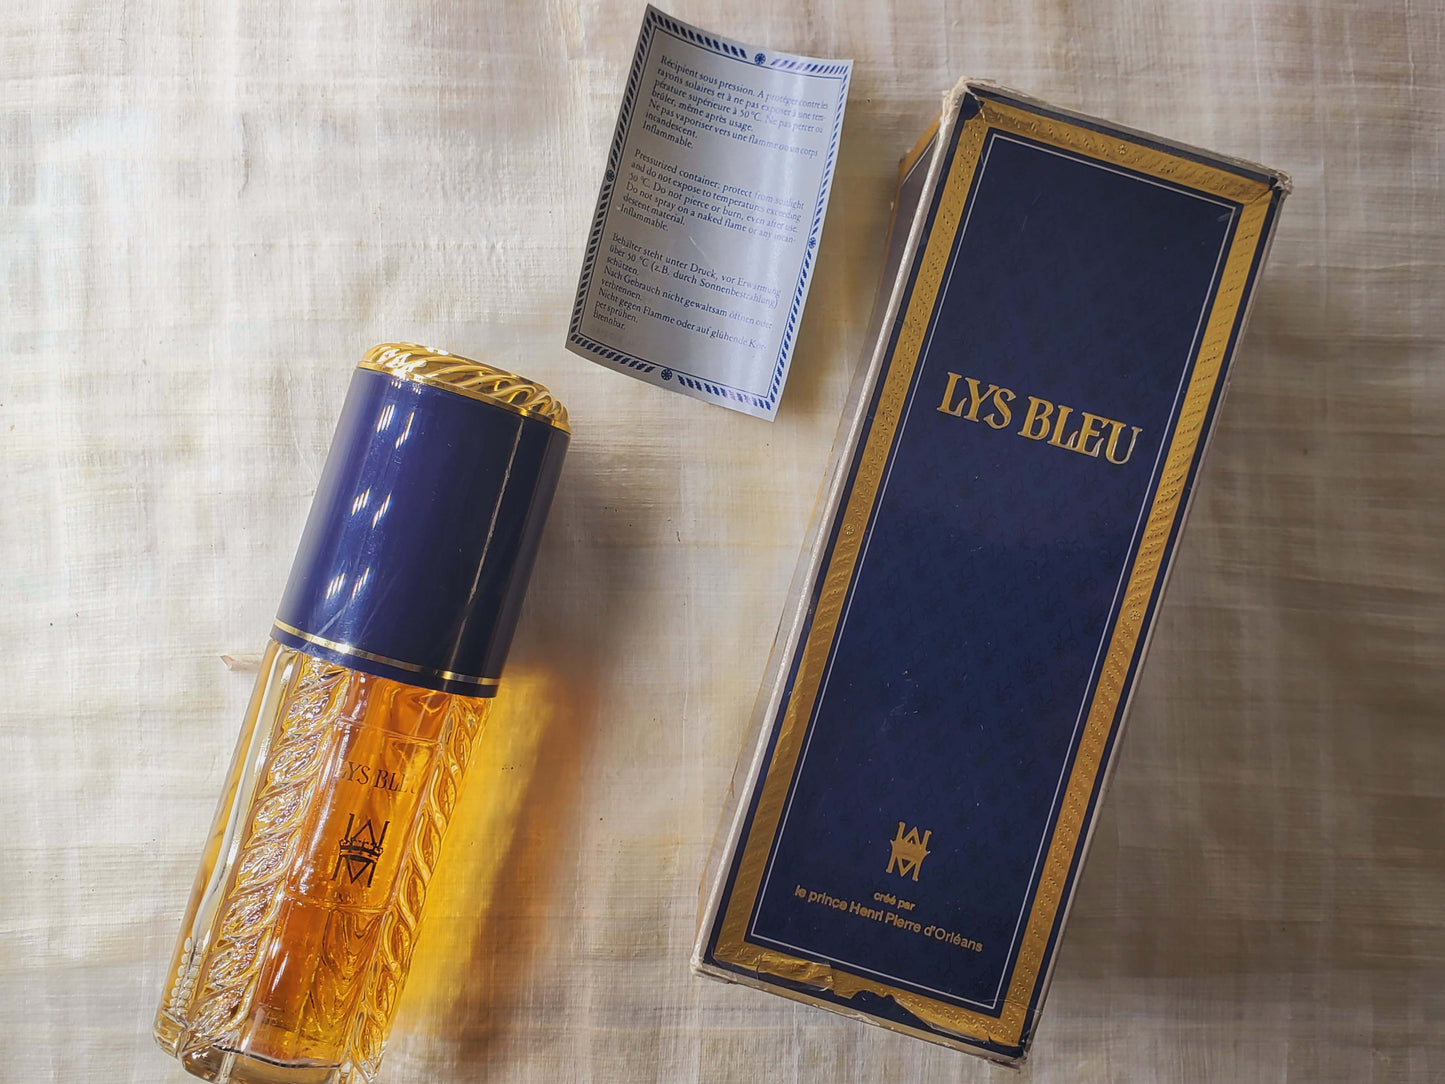 Lys Bleu Prince Henri d'Orleans for women EDT Spray 100 ml 3.4 oz, Vintage